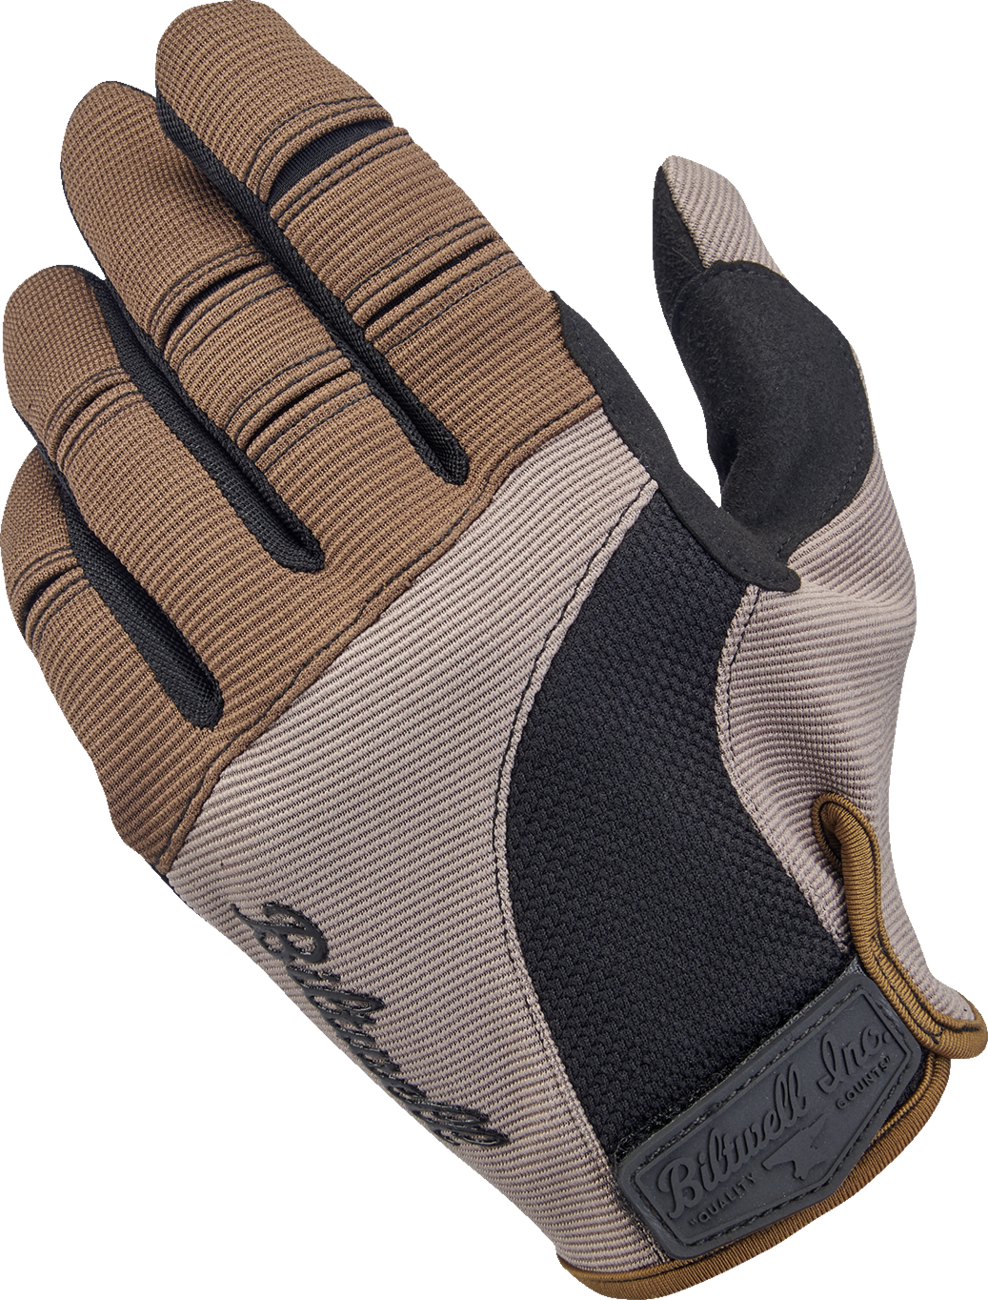 BILTWELL Moto Gloves - Coyote/Black - XL 1501-1301-005